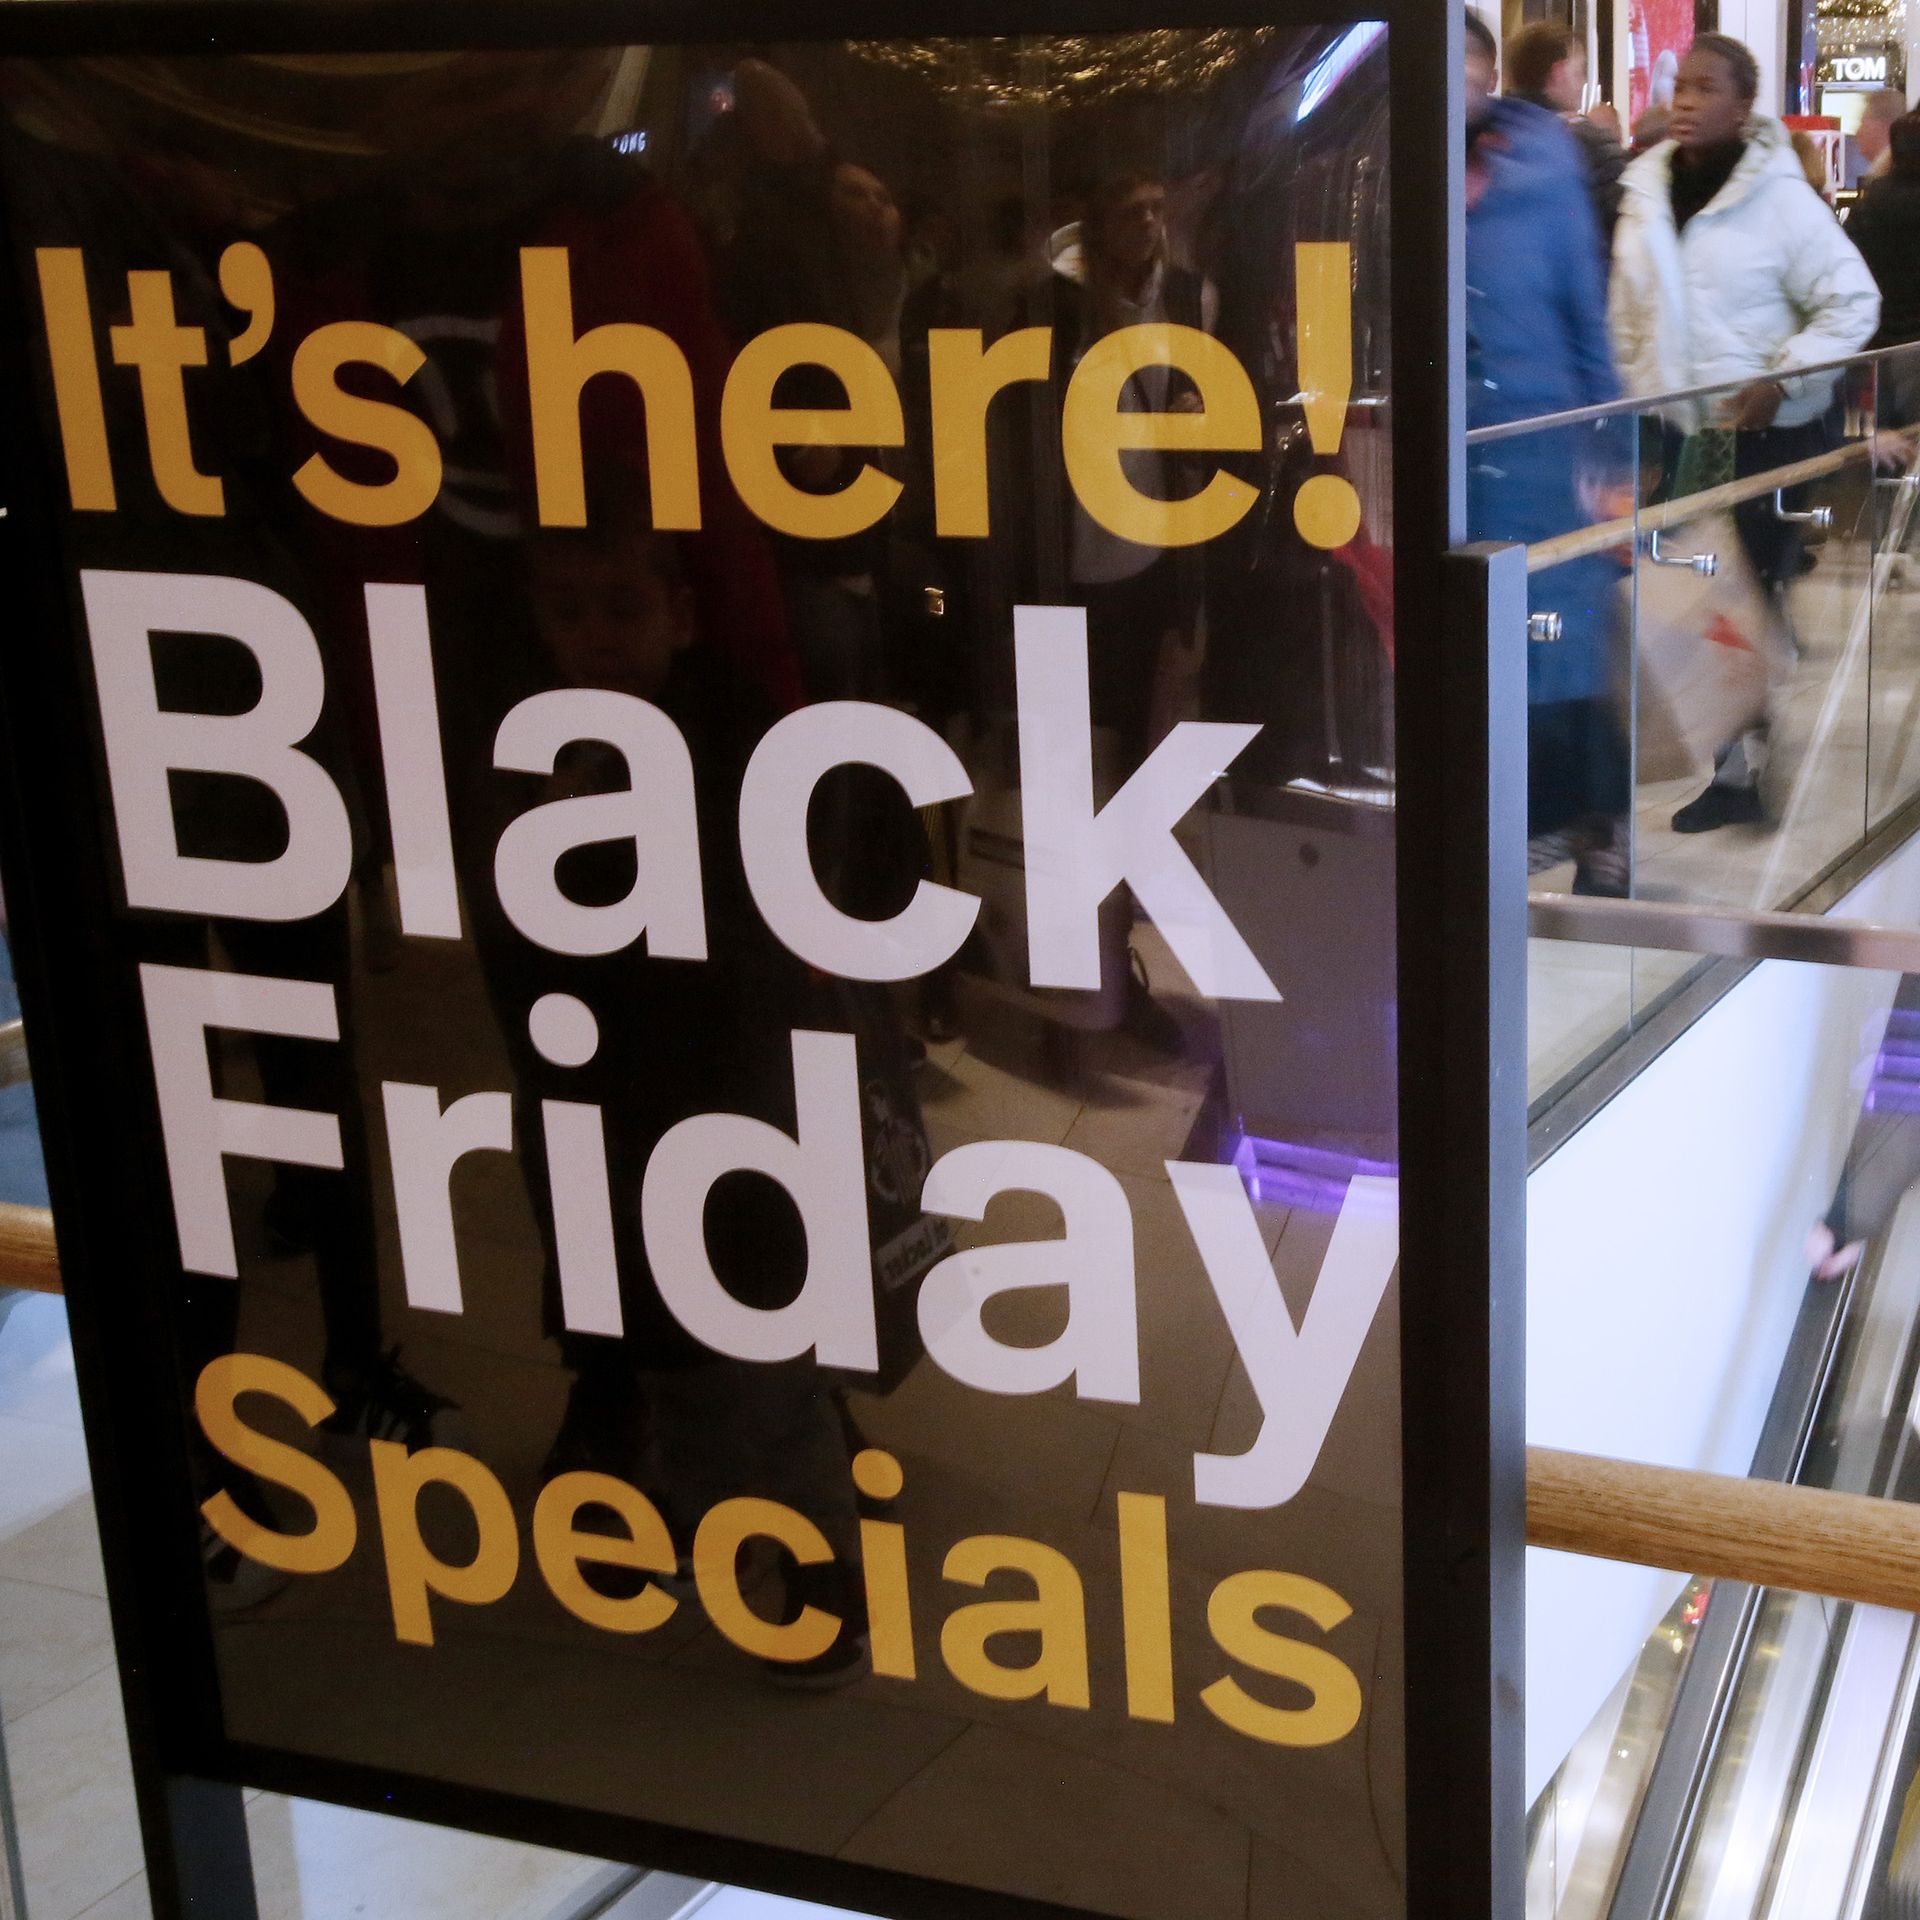 Kohl's Black Friday 2024 - Ad & Deals